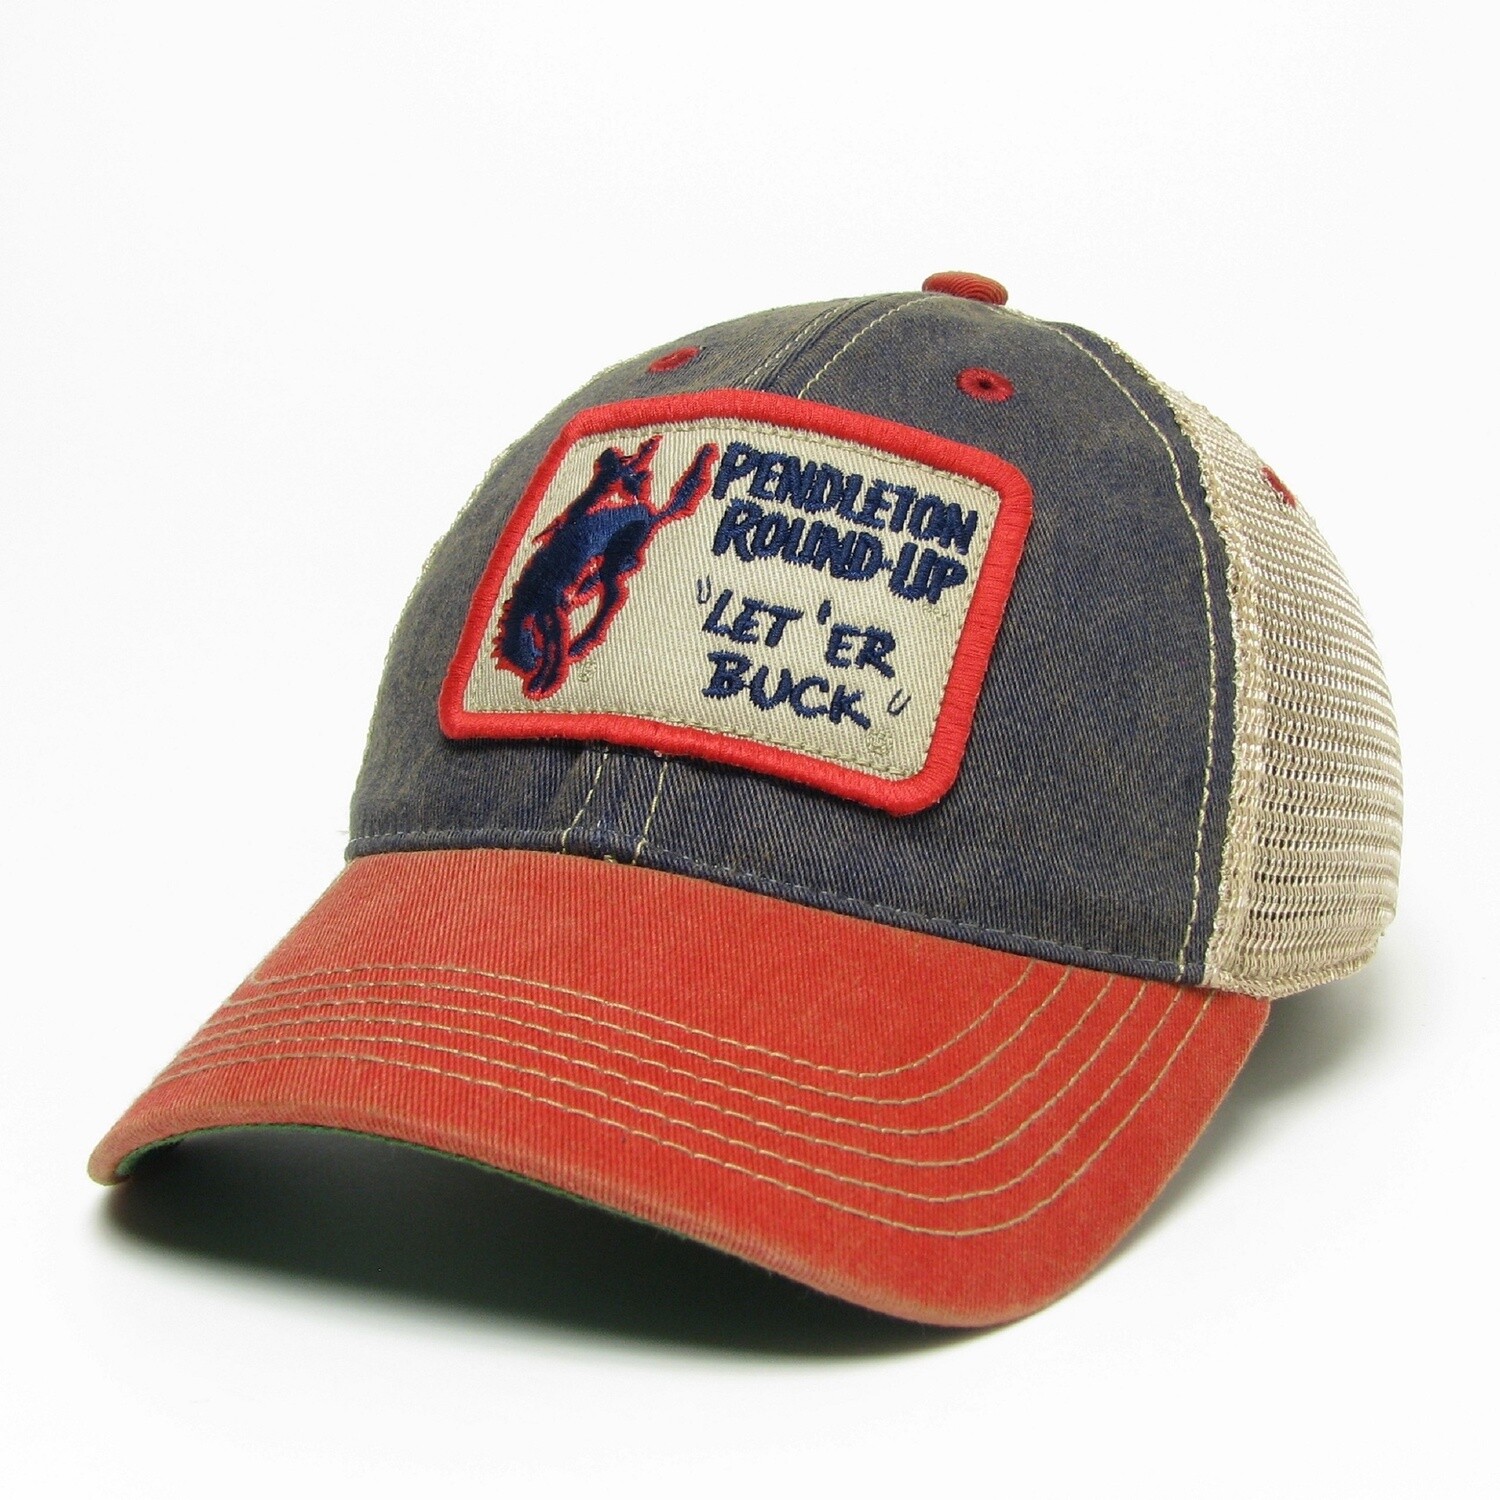 Pendleton Round-Up Old Favorite Trucker Hat